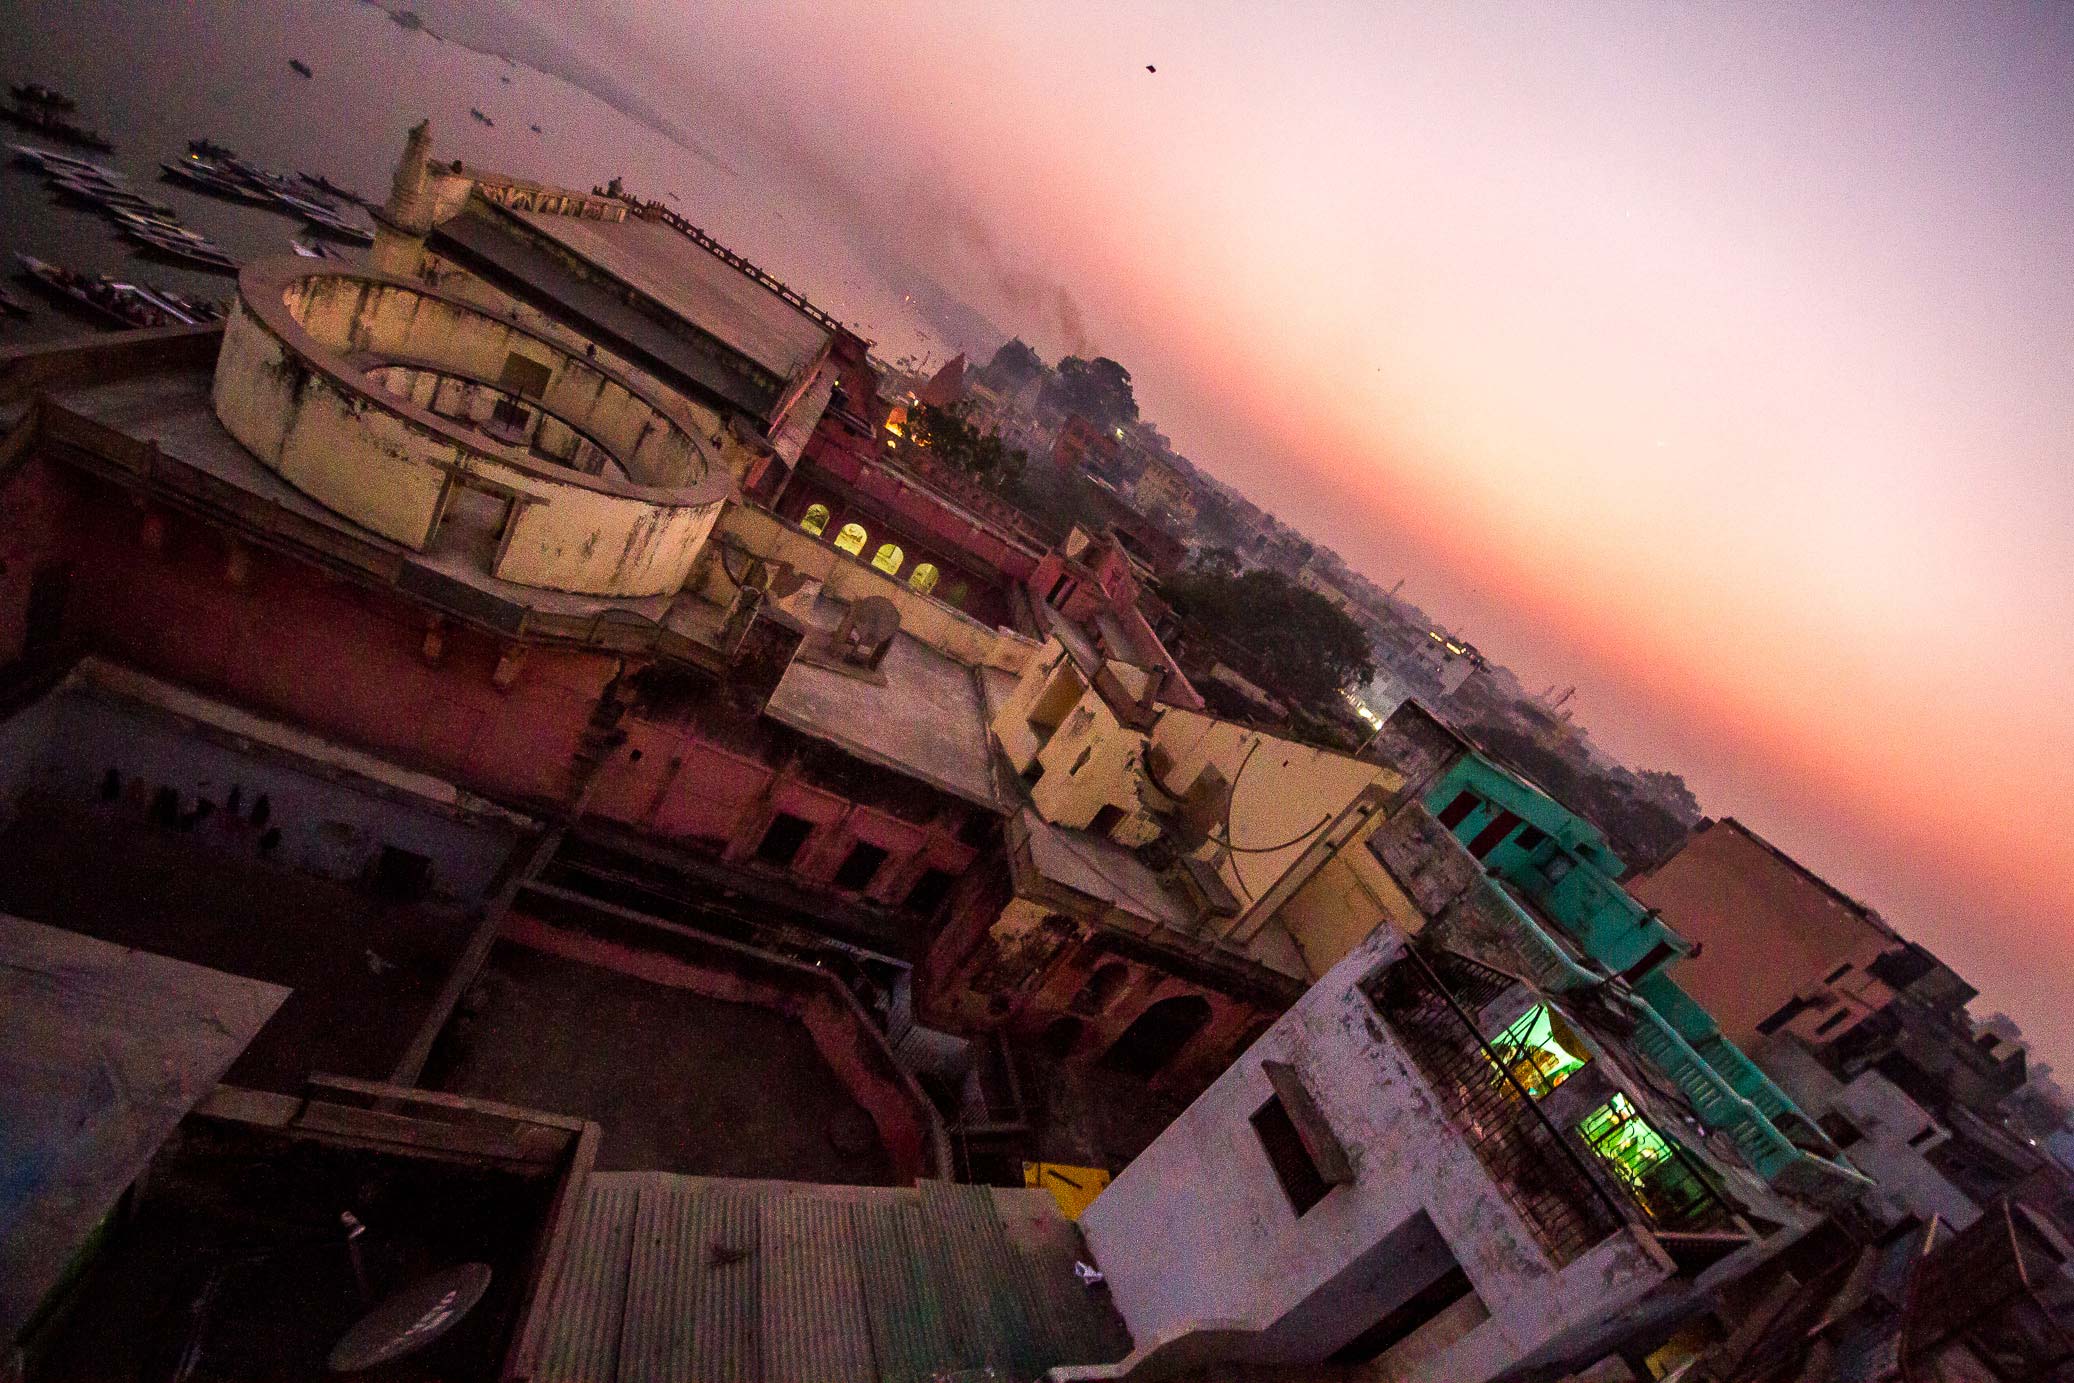 /Guewen/galeries/public/Voyages/Inde/varanasi/divers/autre/Varanasi_071.jpg